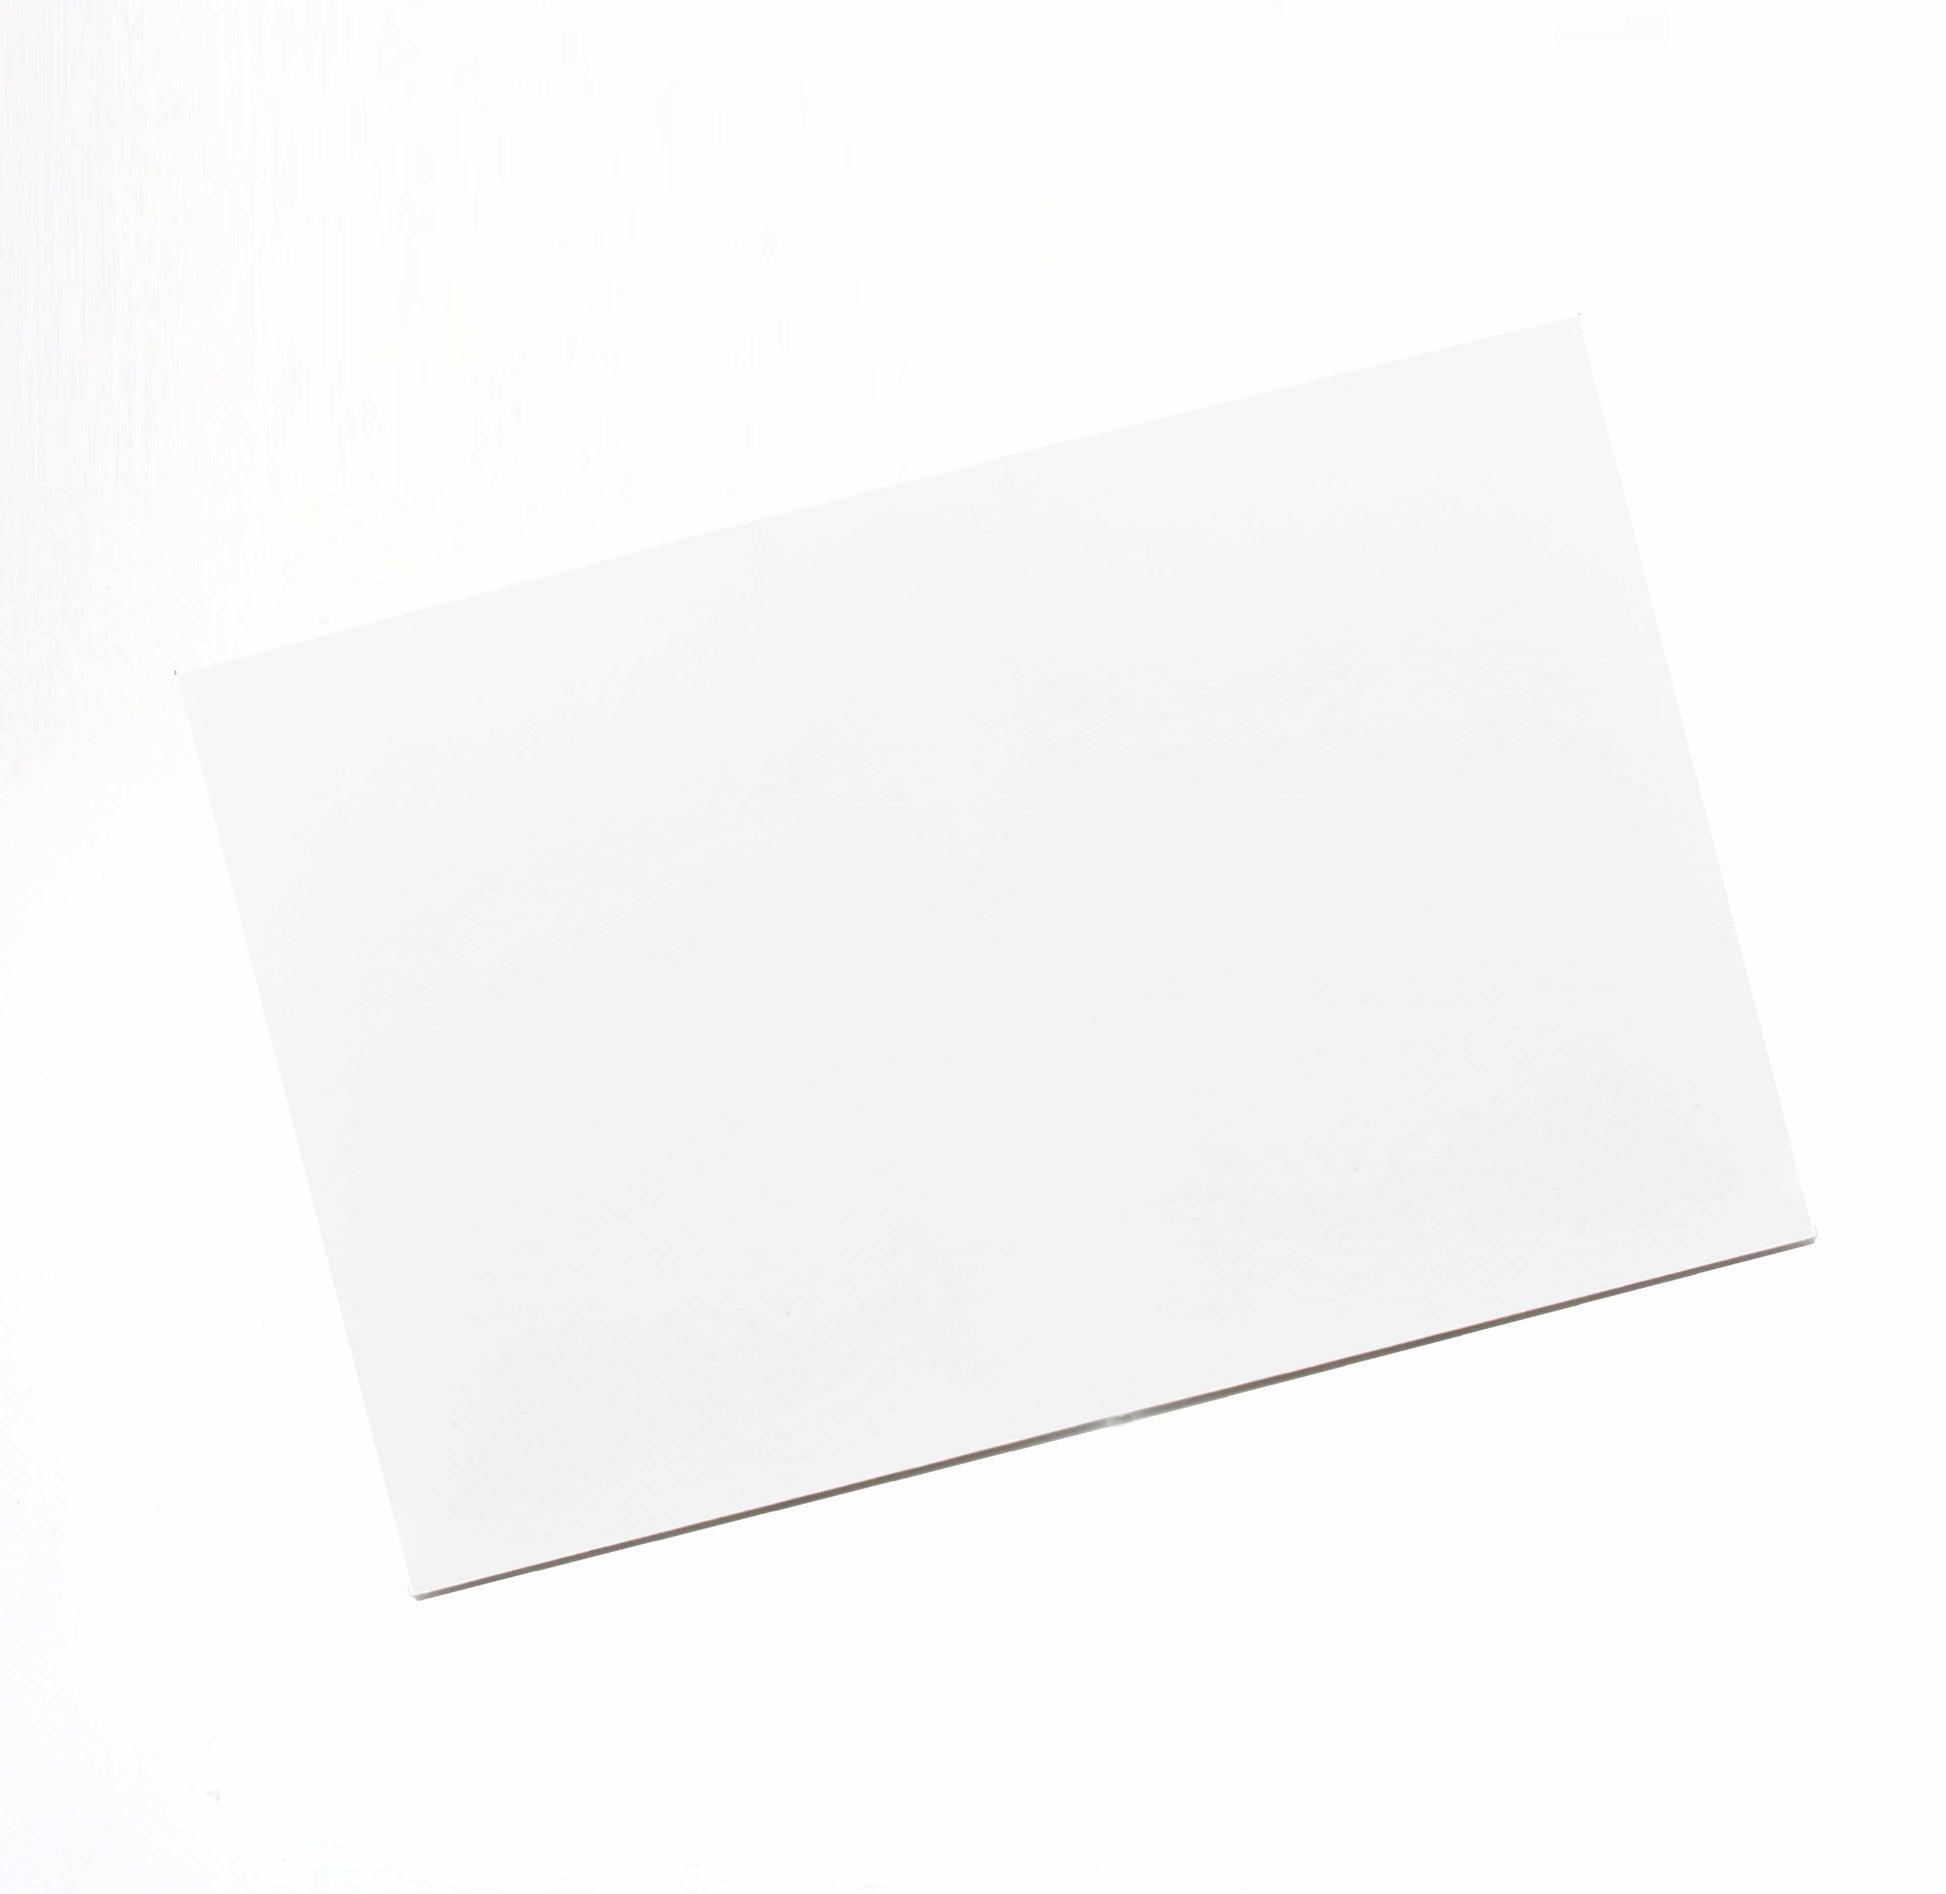 PinkPolish Design Note Cards "Mindless" Handmade Notecard